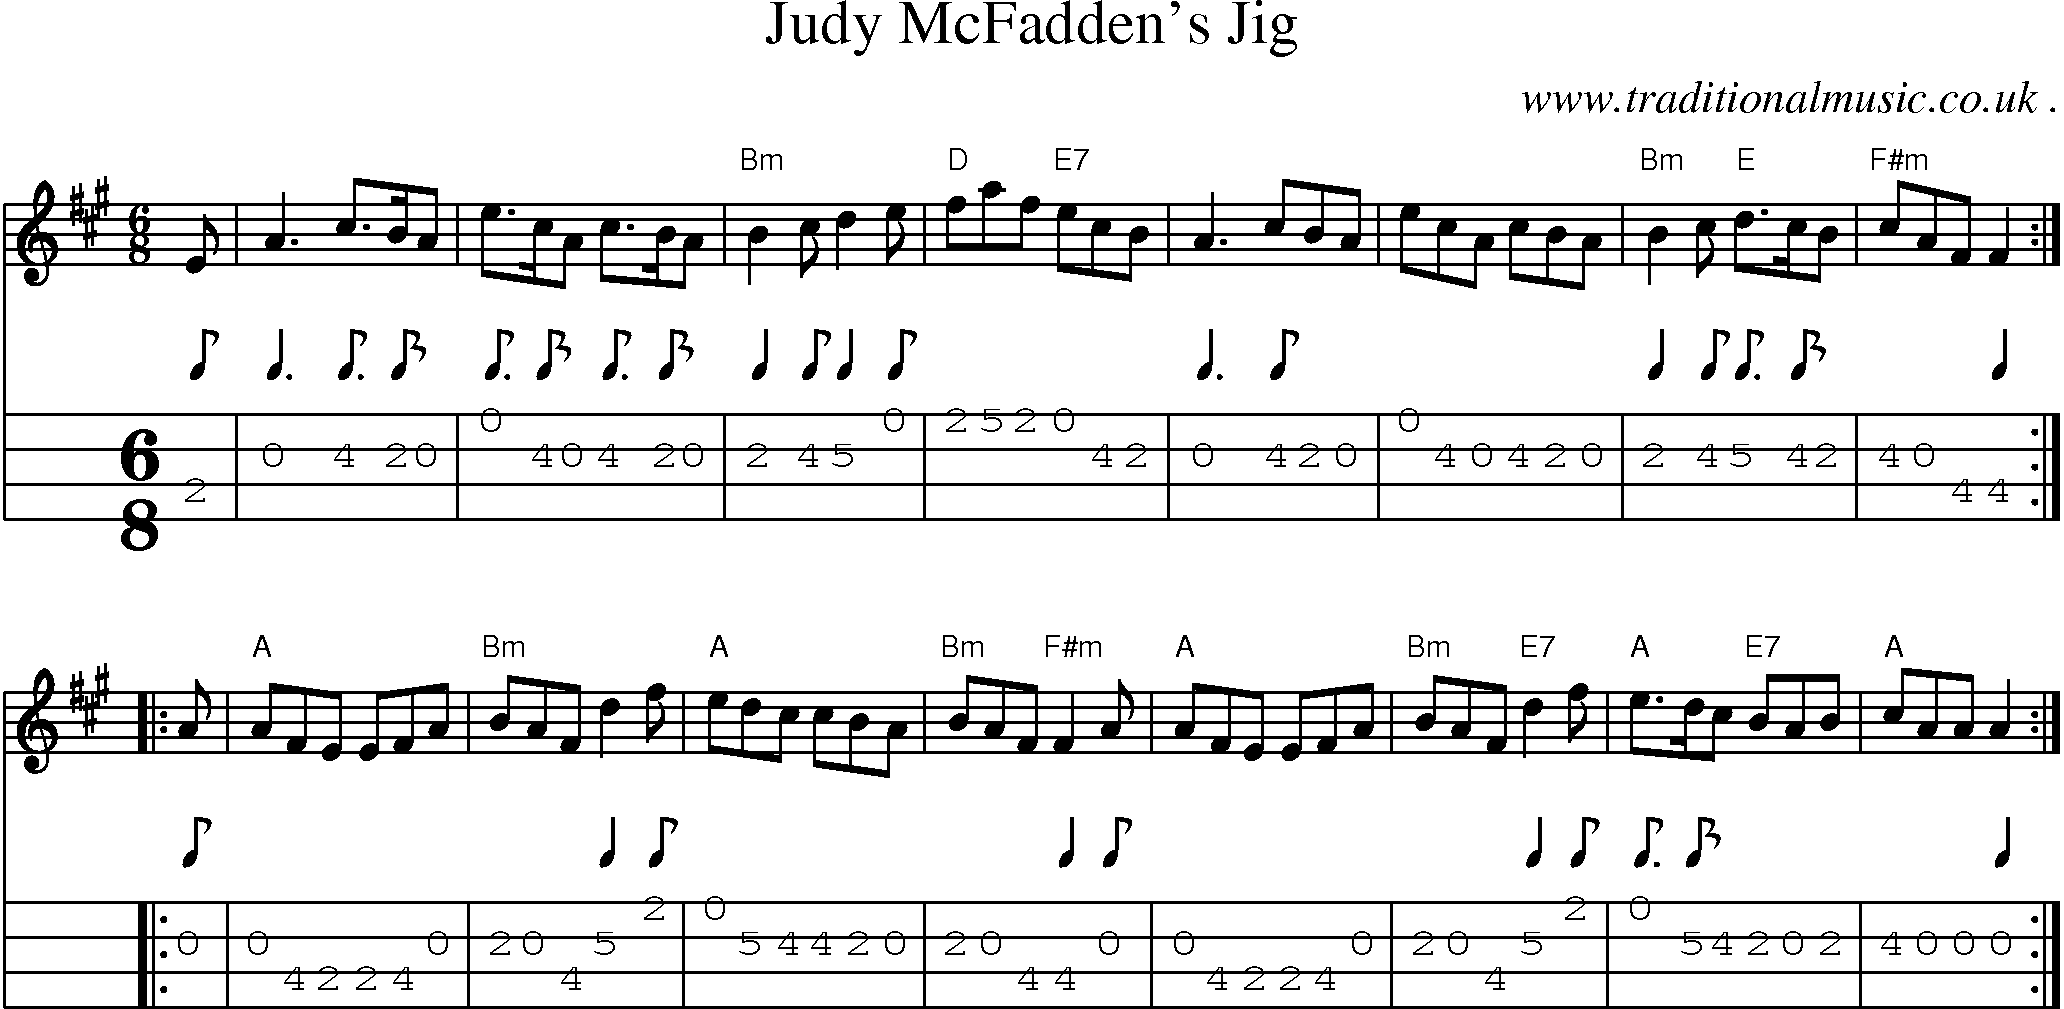 Sheet-music  score, Chords and Mandolin Tabs for Judy Mcfaddens Jig